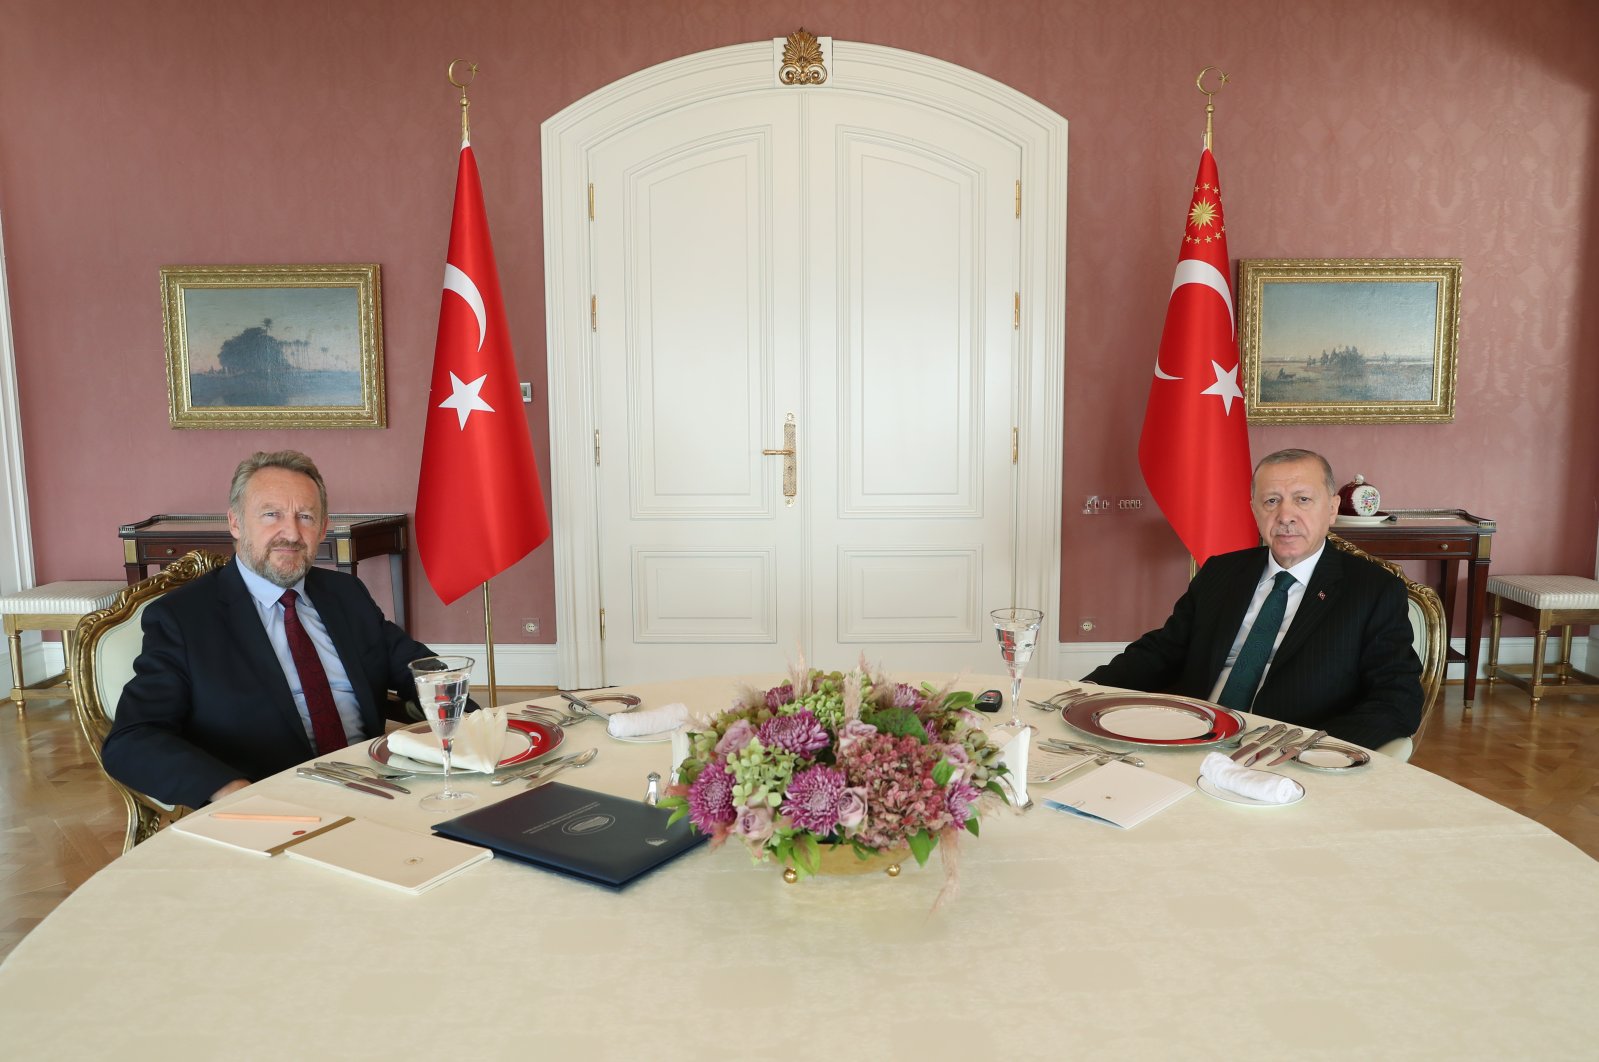 President Recep Tayyip Erdoğan meets with Bakir Izetbegovic in Istanbul, Turkey, Nov. 2, 2021. (DHA Photo)